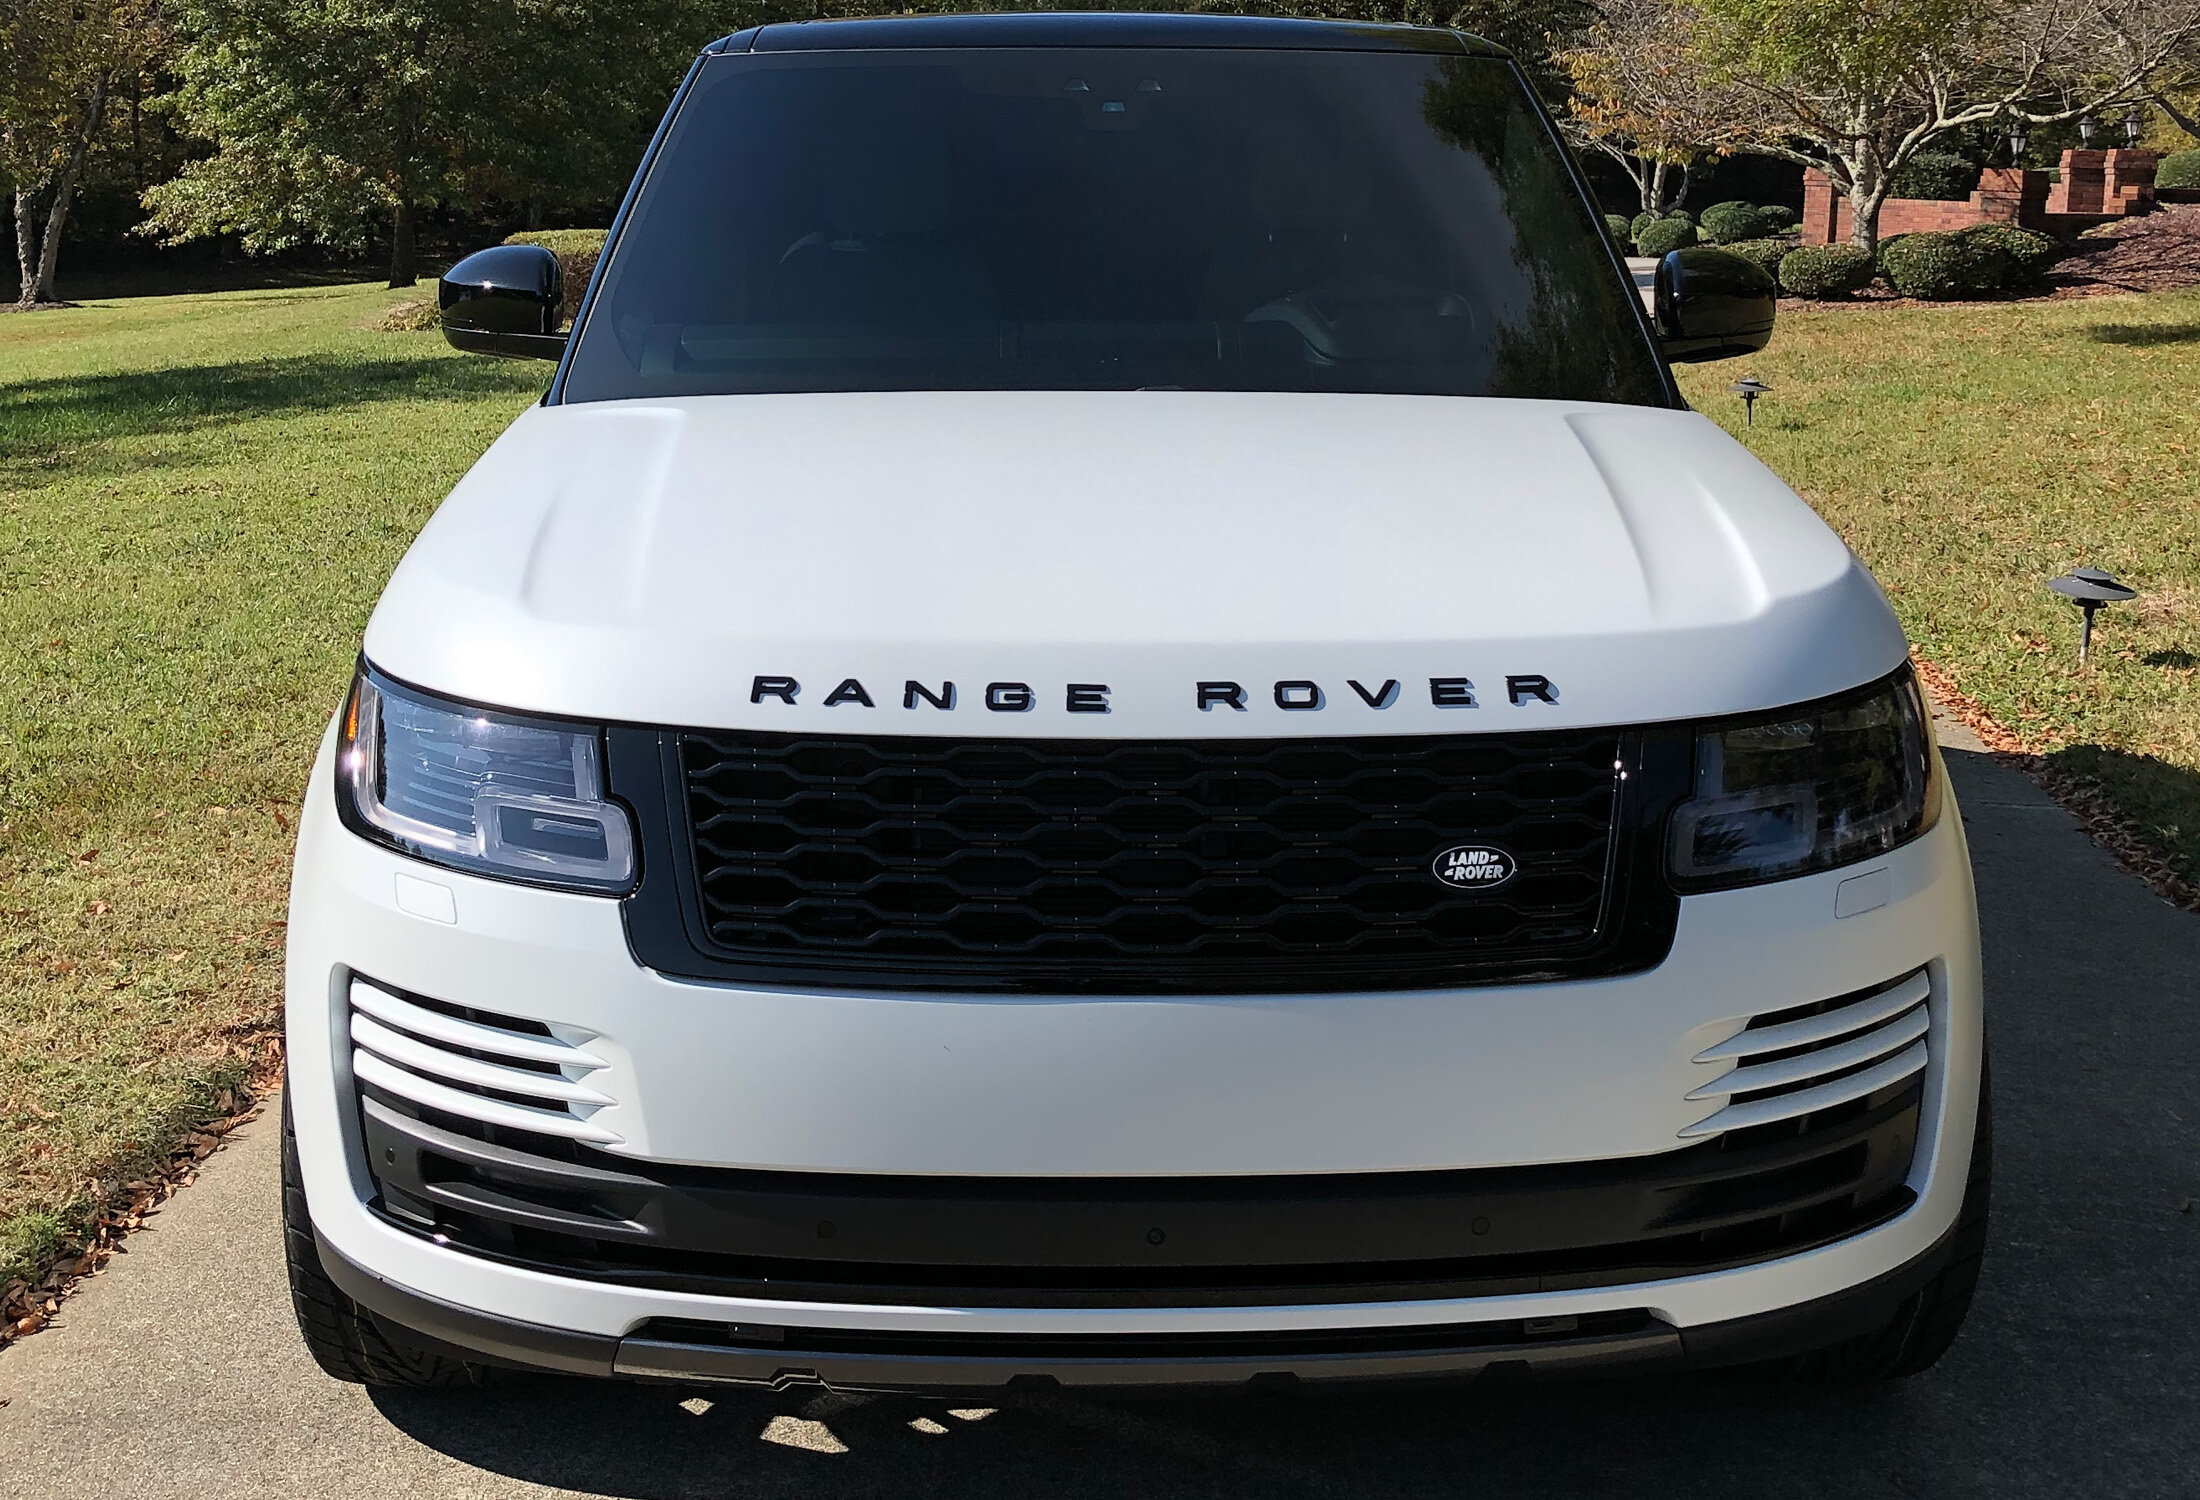 Range Rover windshield.